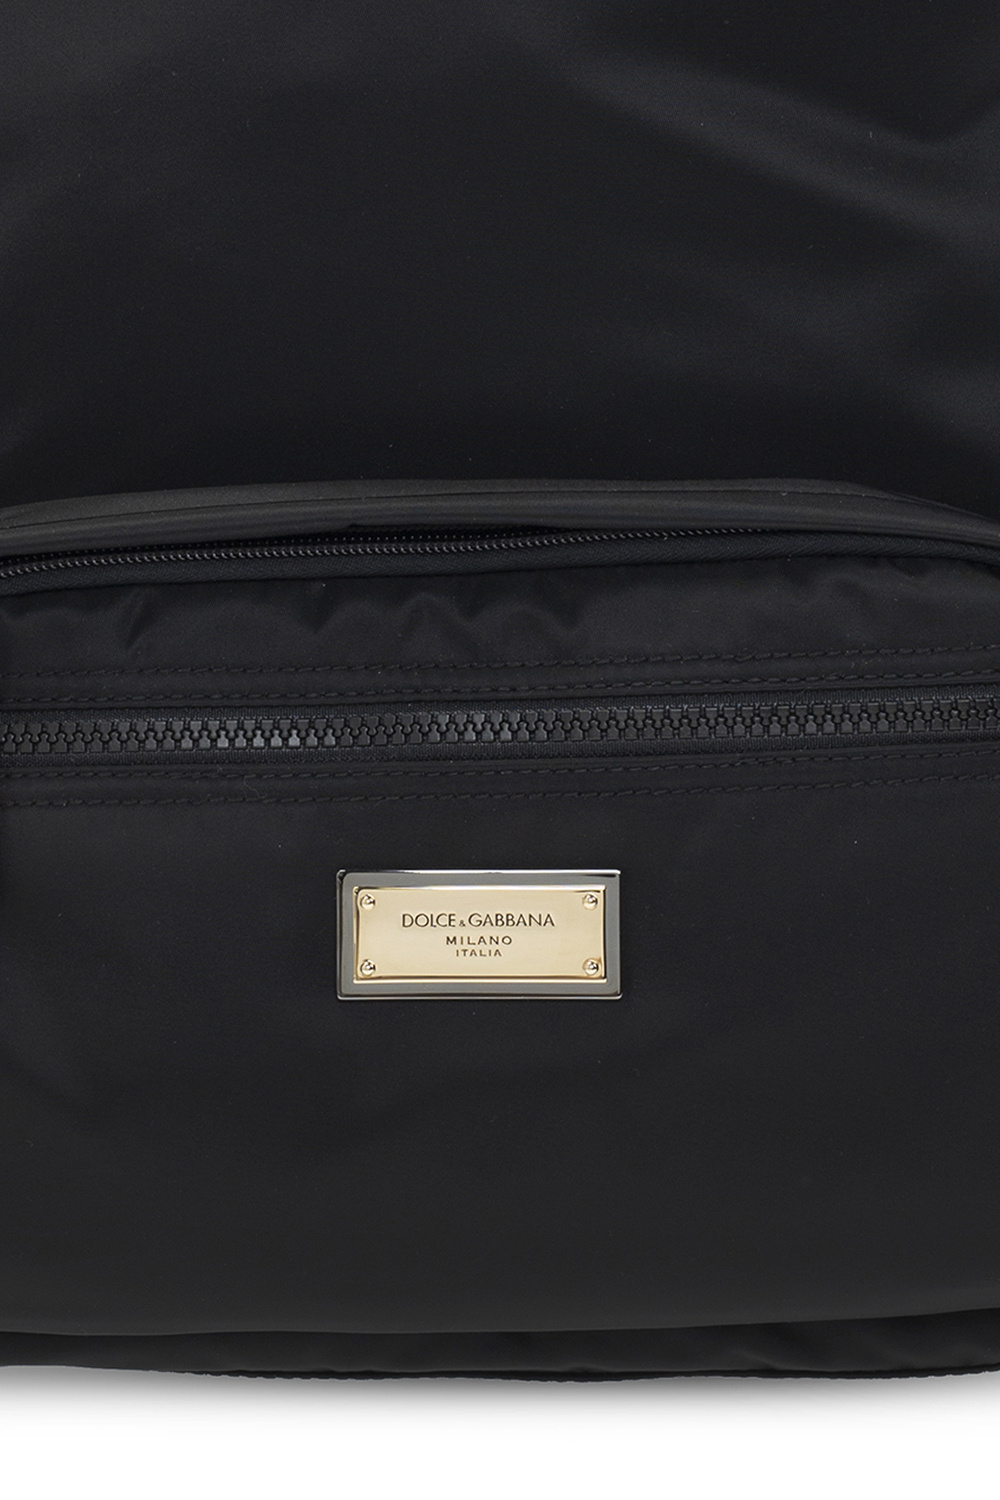 dolce mois & Gabbana Nero Sicilia DNA collection backpack